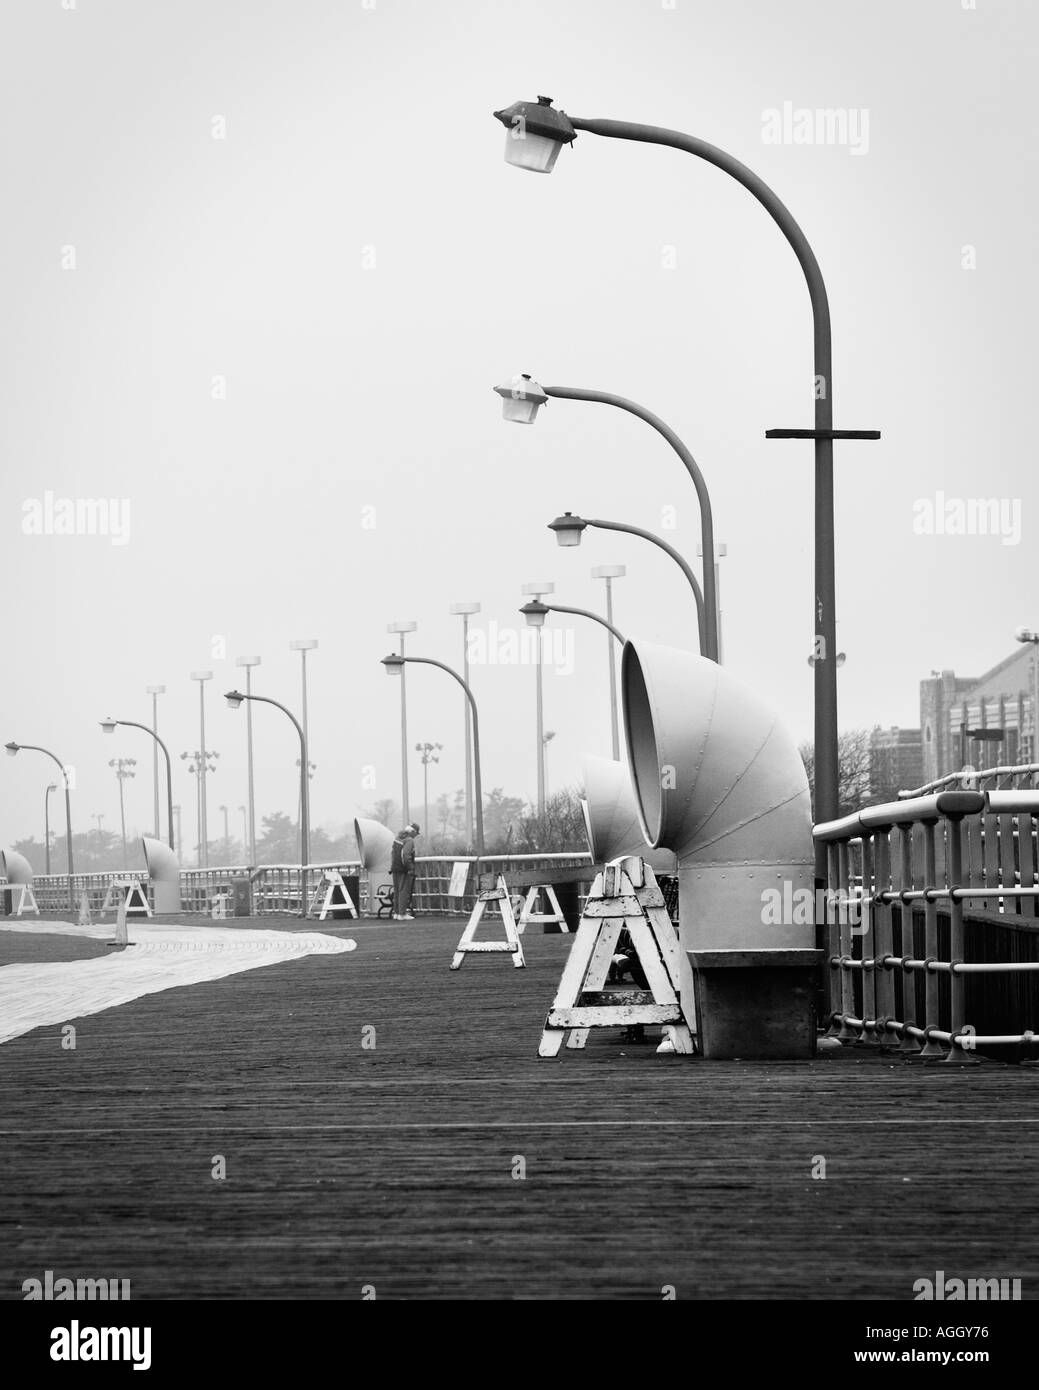 Jones Beach state park boardwalk with lampposts in black white Stock Photo